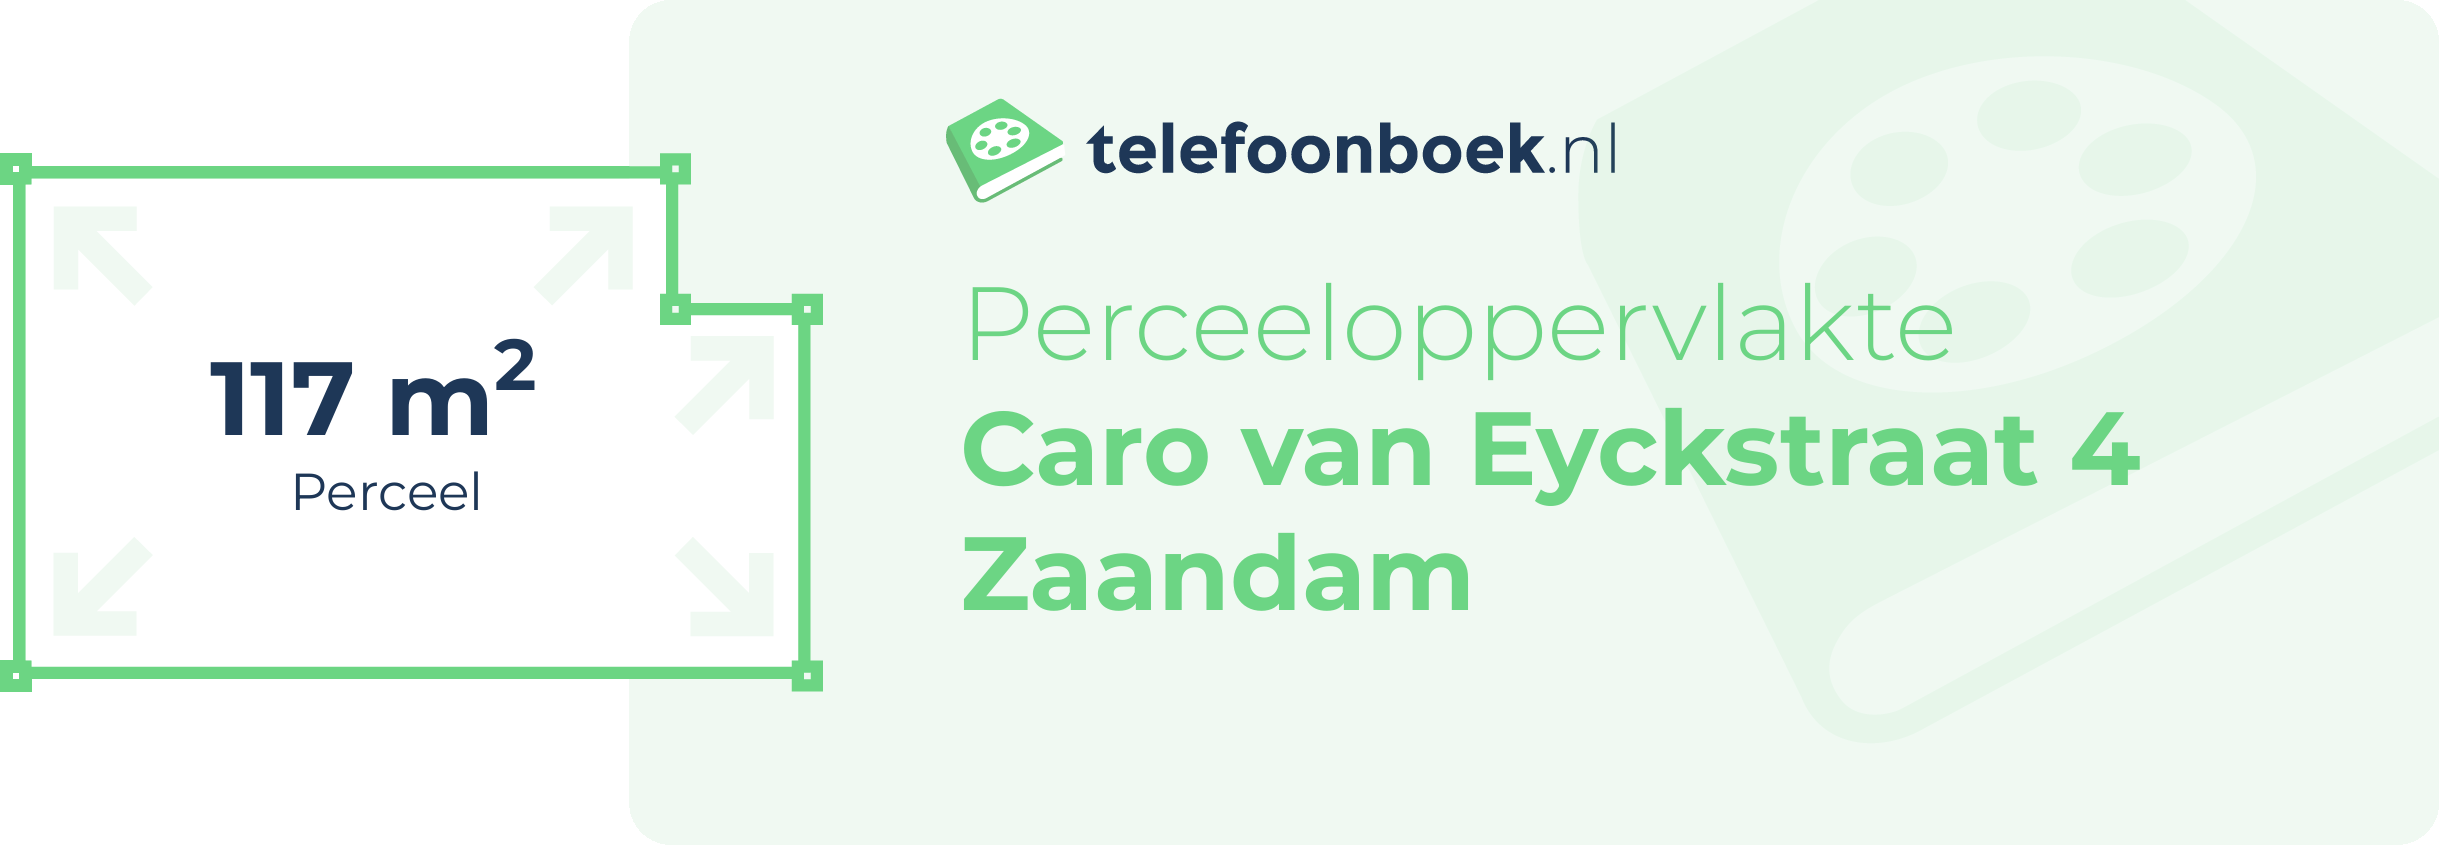 Perceeloppervlakte Caro Van Eyckstraat 4 Zaandam